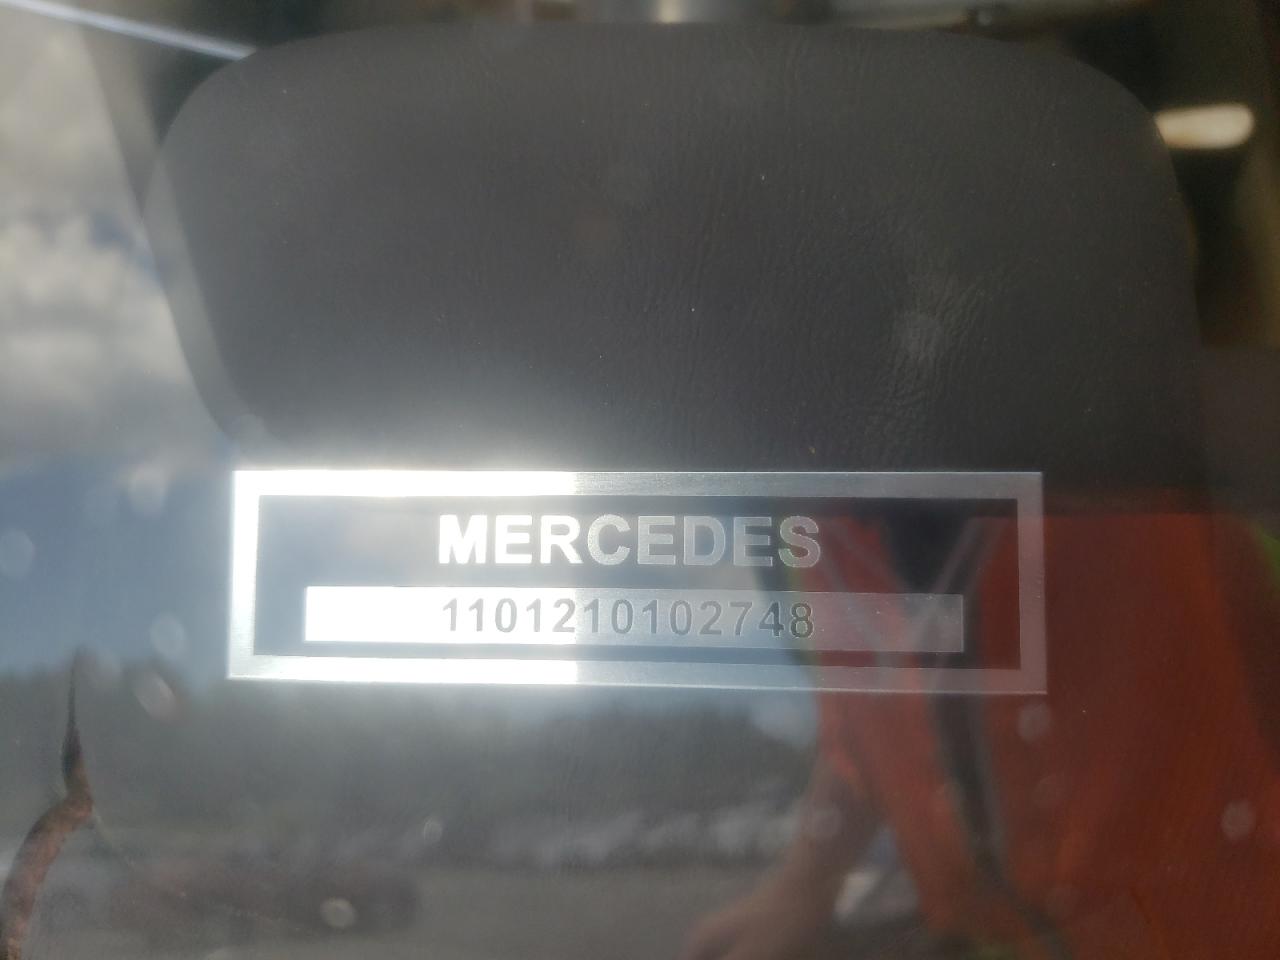 1963 MERCEDES-BENZ 220 S VIN: 1101210102748